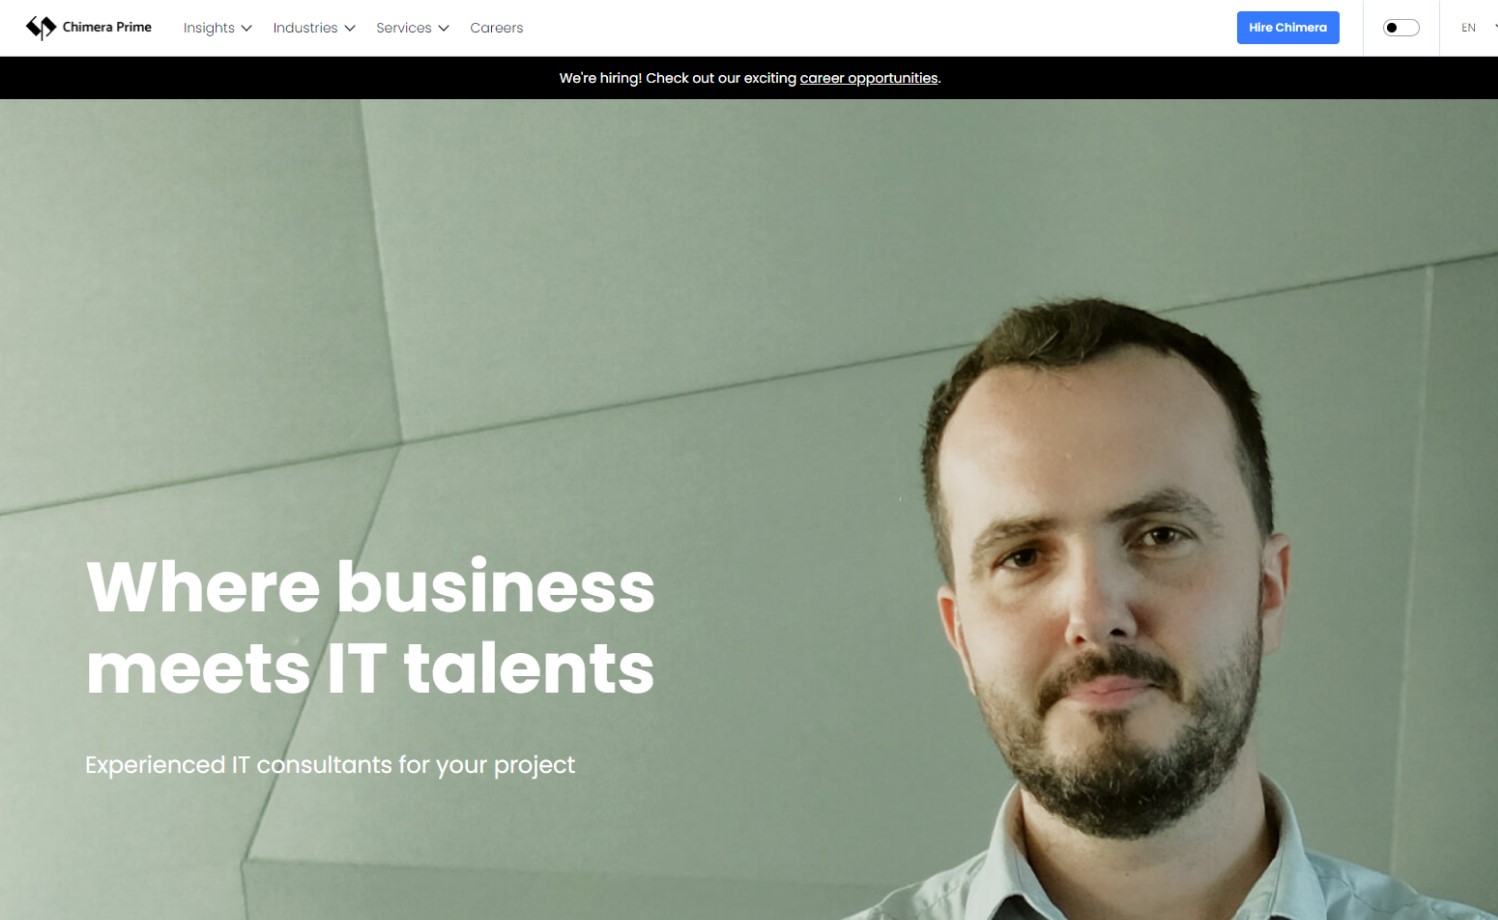 IT Company Website Design